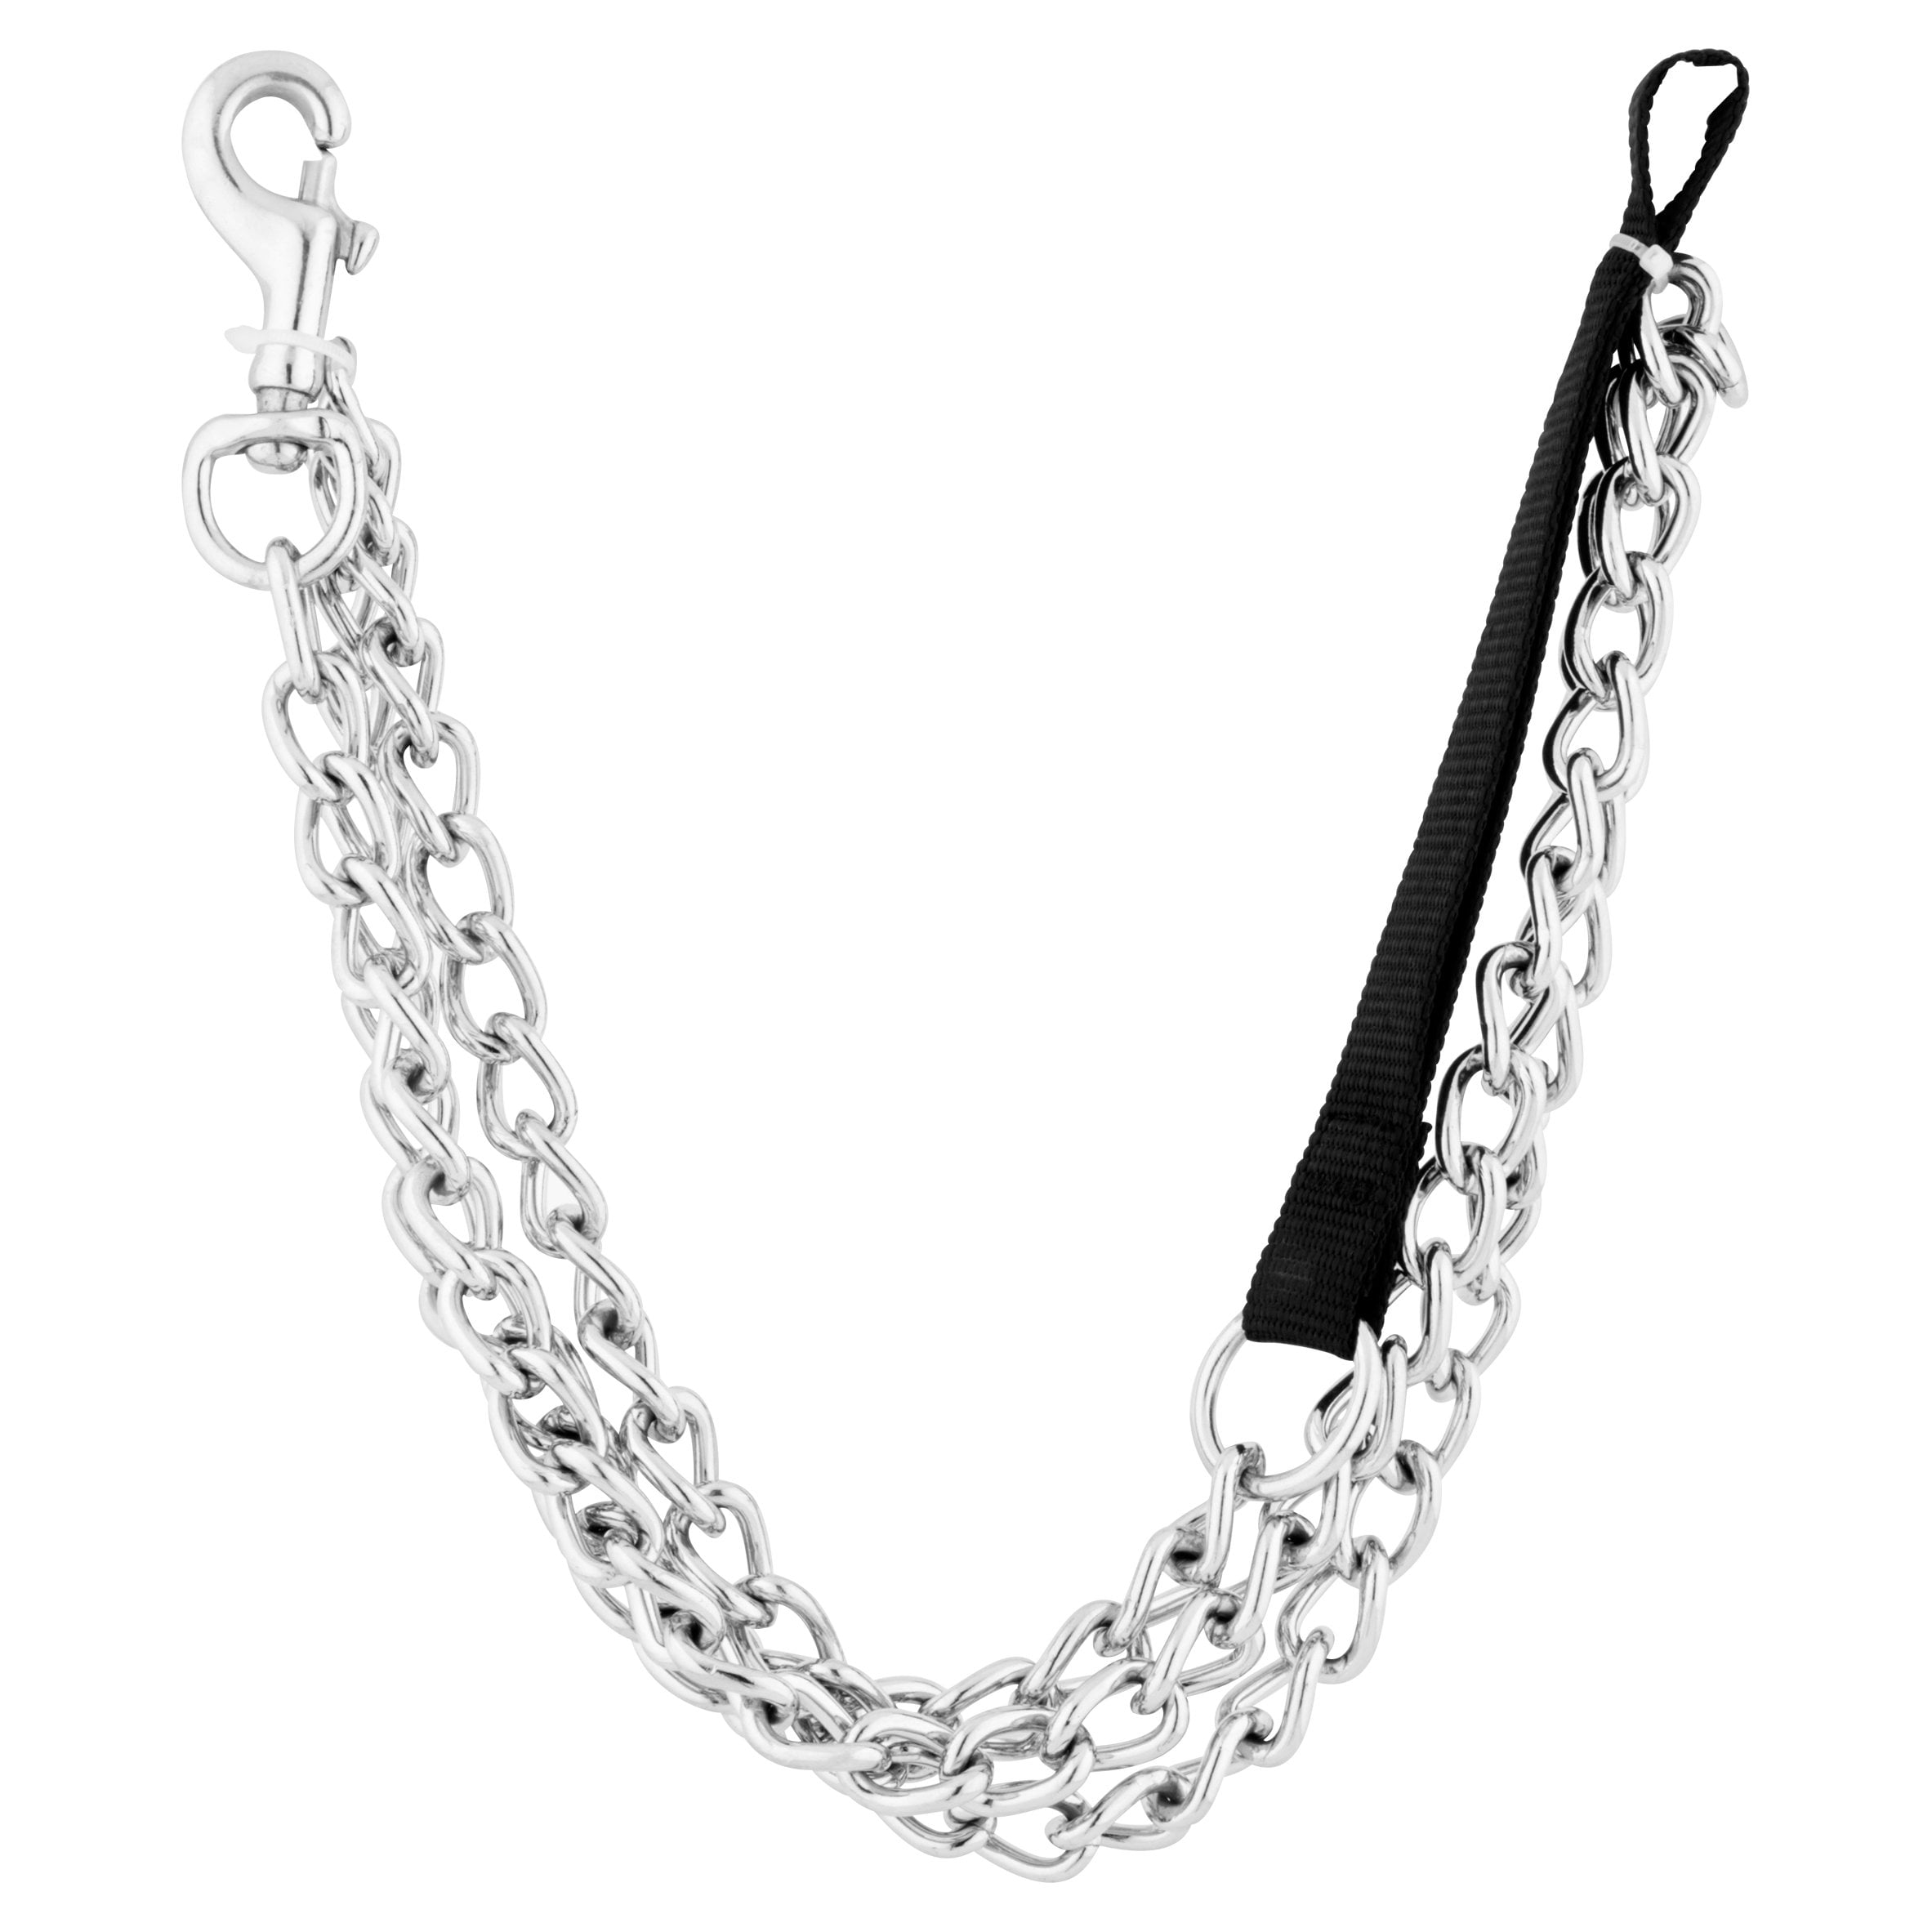 metal dog chain